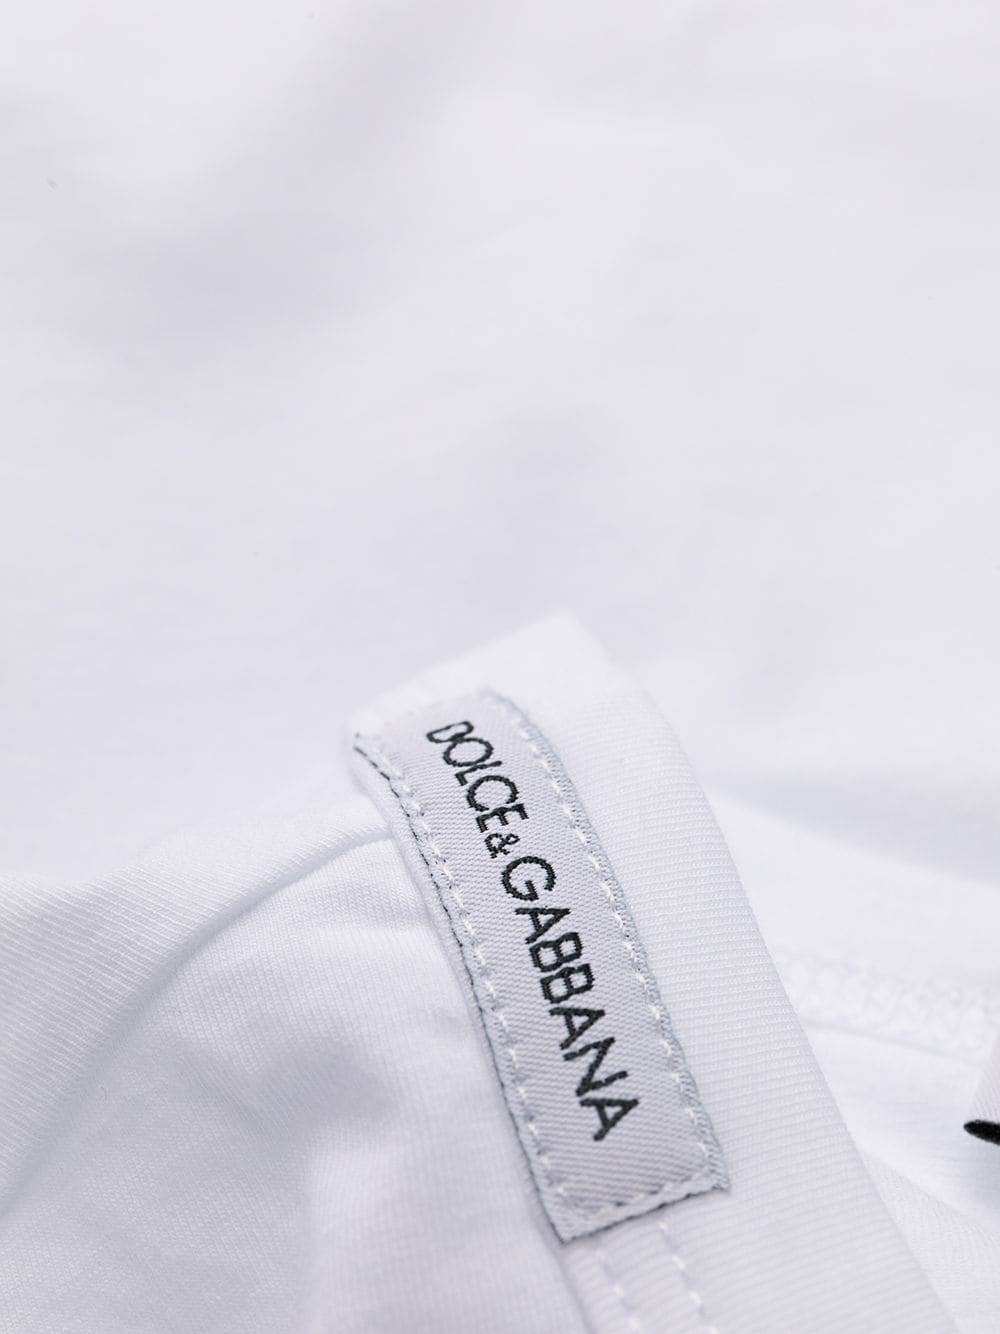 dolce and gabbana underwear t shirt